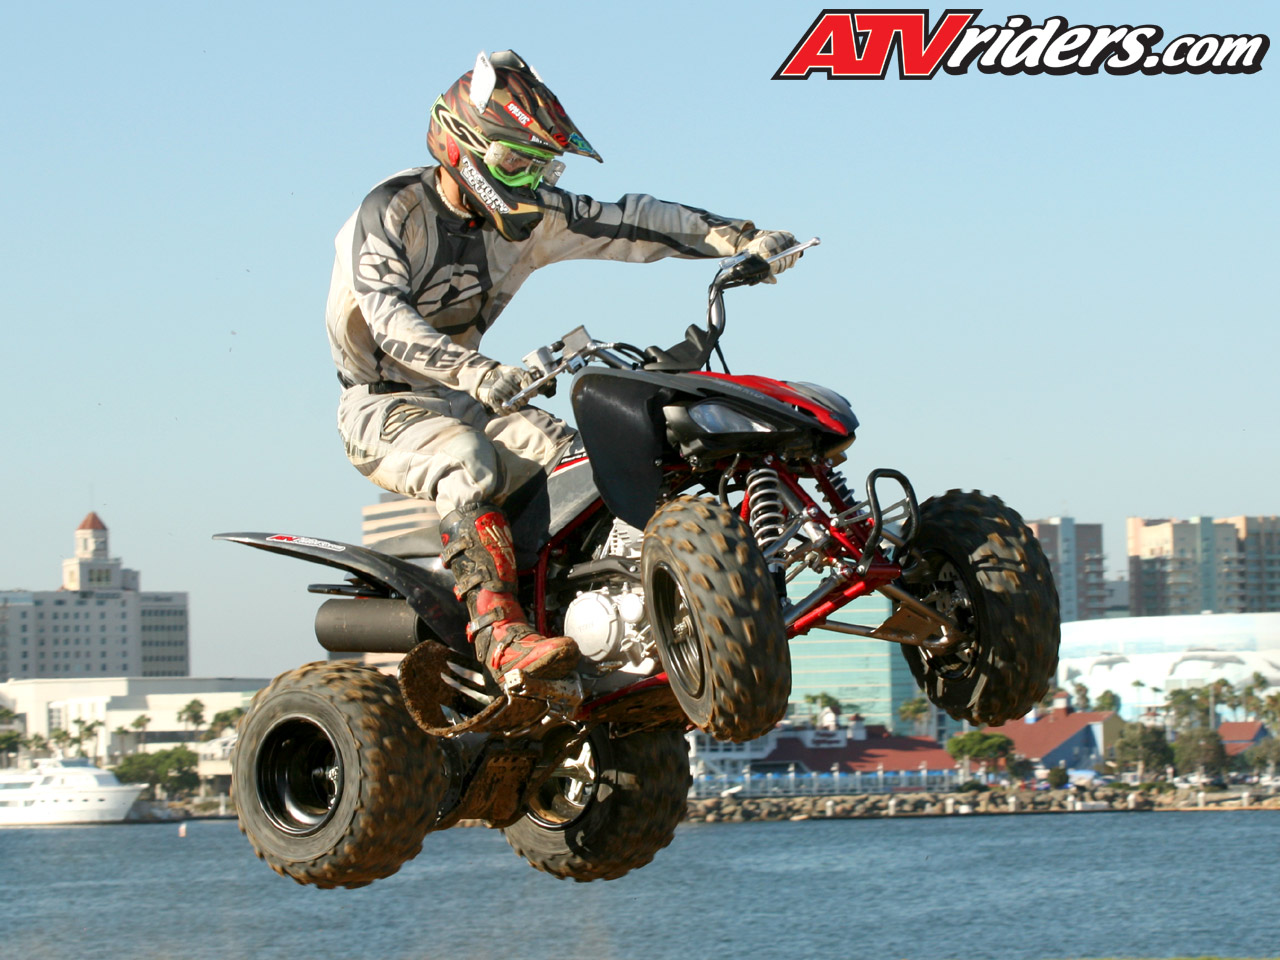 2008 Yamaha Raptor 250 ATV Motocross Race Test Review - Glen Helen - Yamaha  / ITP Quadcross Series